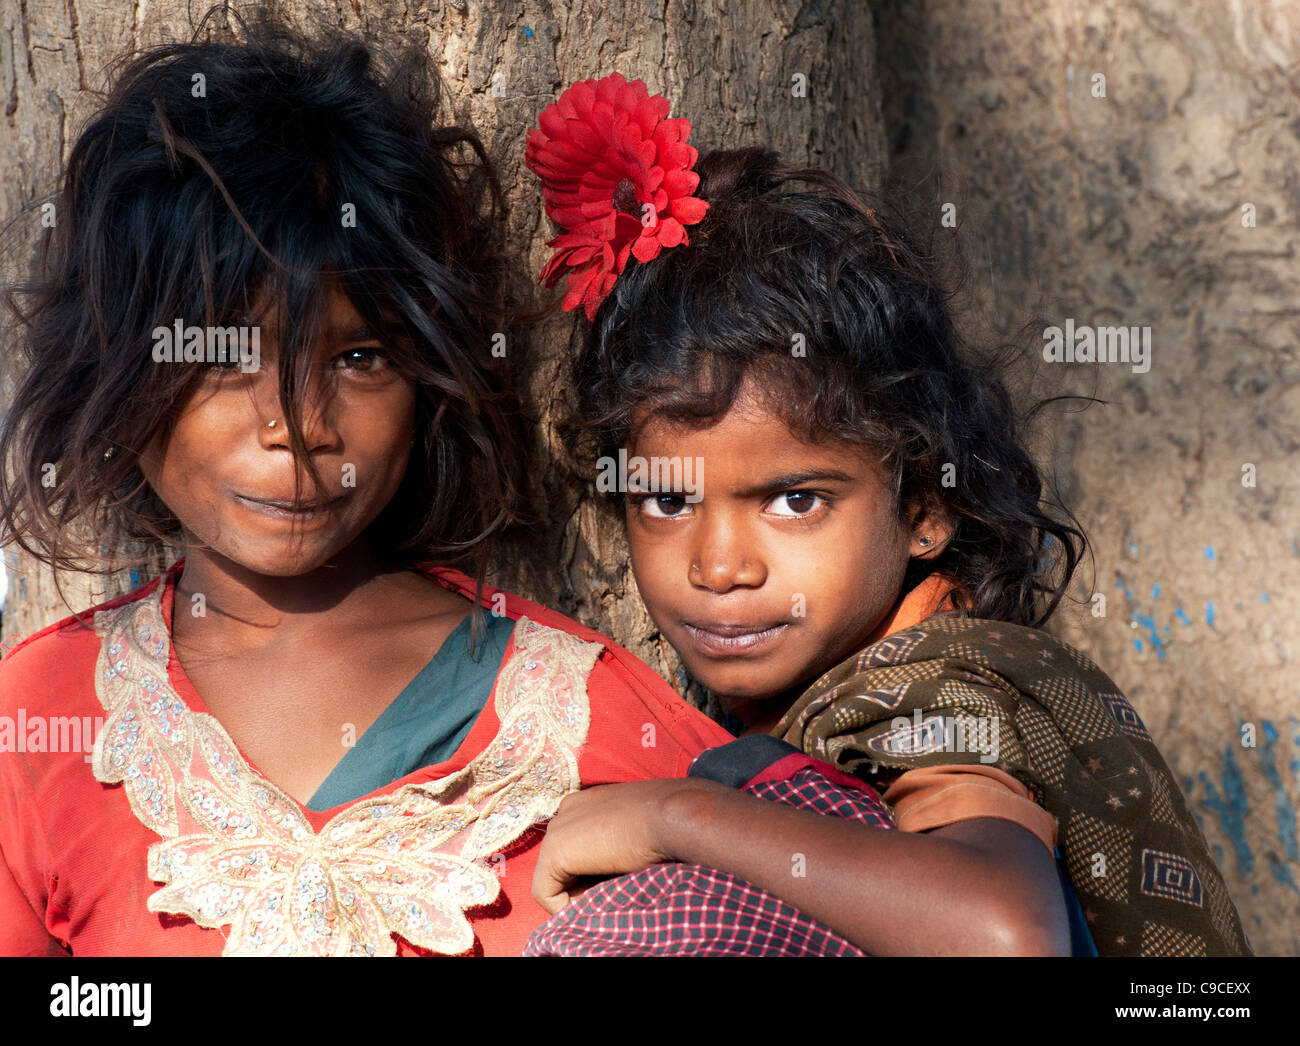 Happy Poor Indian nomadic beggar girls against a tree. Andhra Pradesh, India Stock Photo